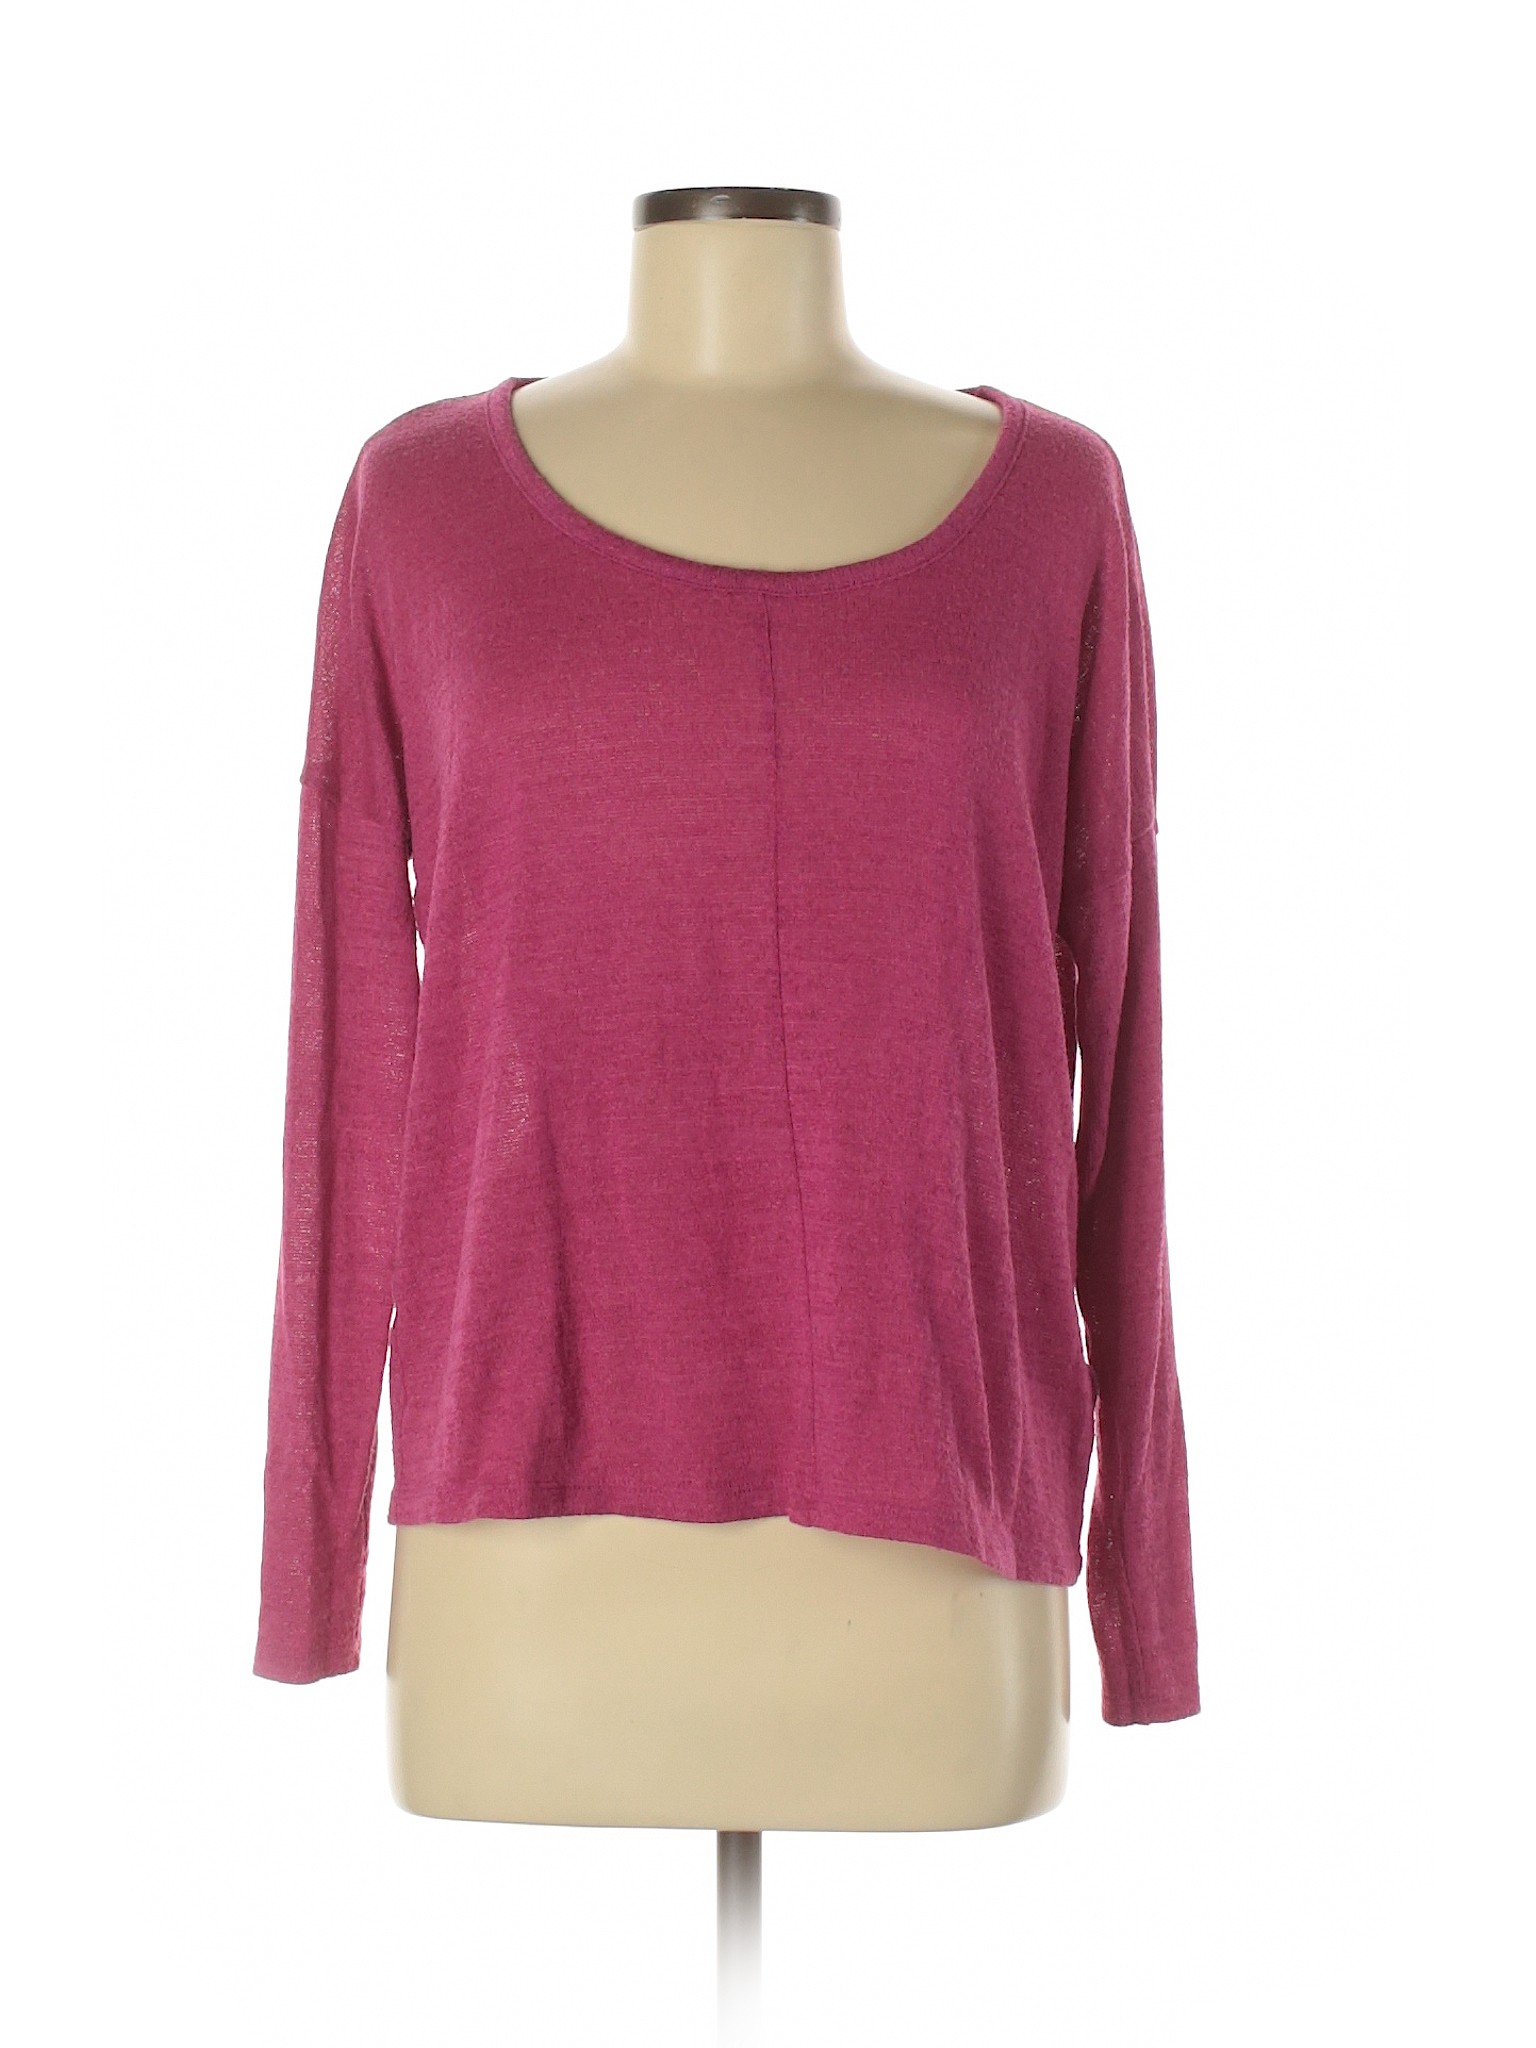 Old Navy Women Pink Pullover Sweater M | eBay